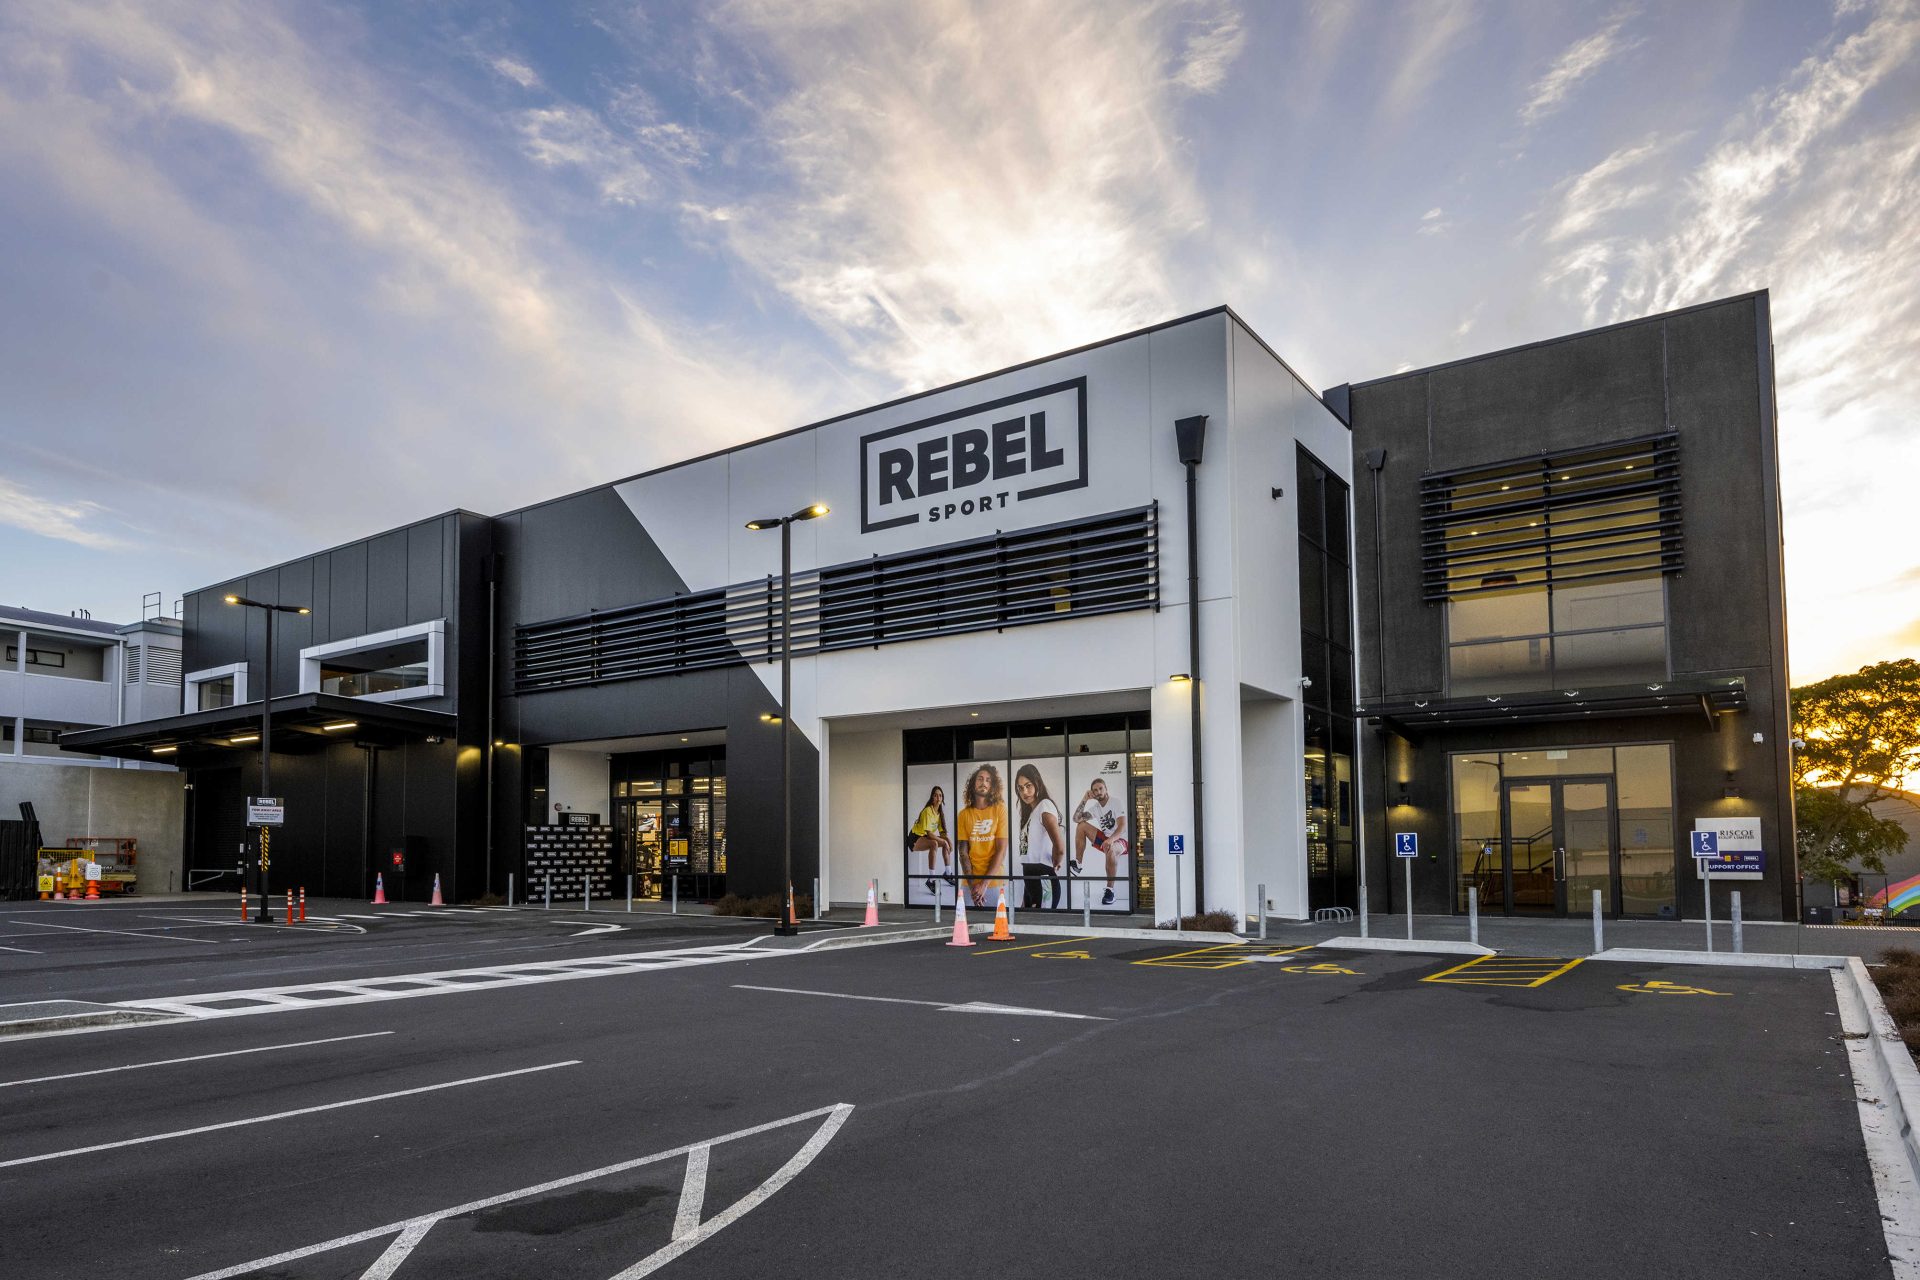 Rebel Sport - Retail Dimension